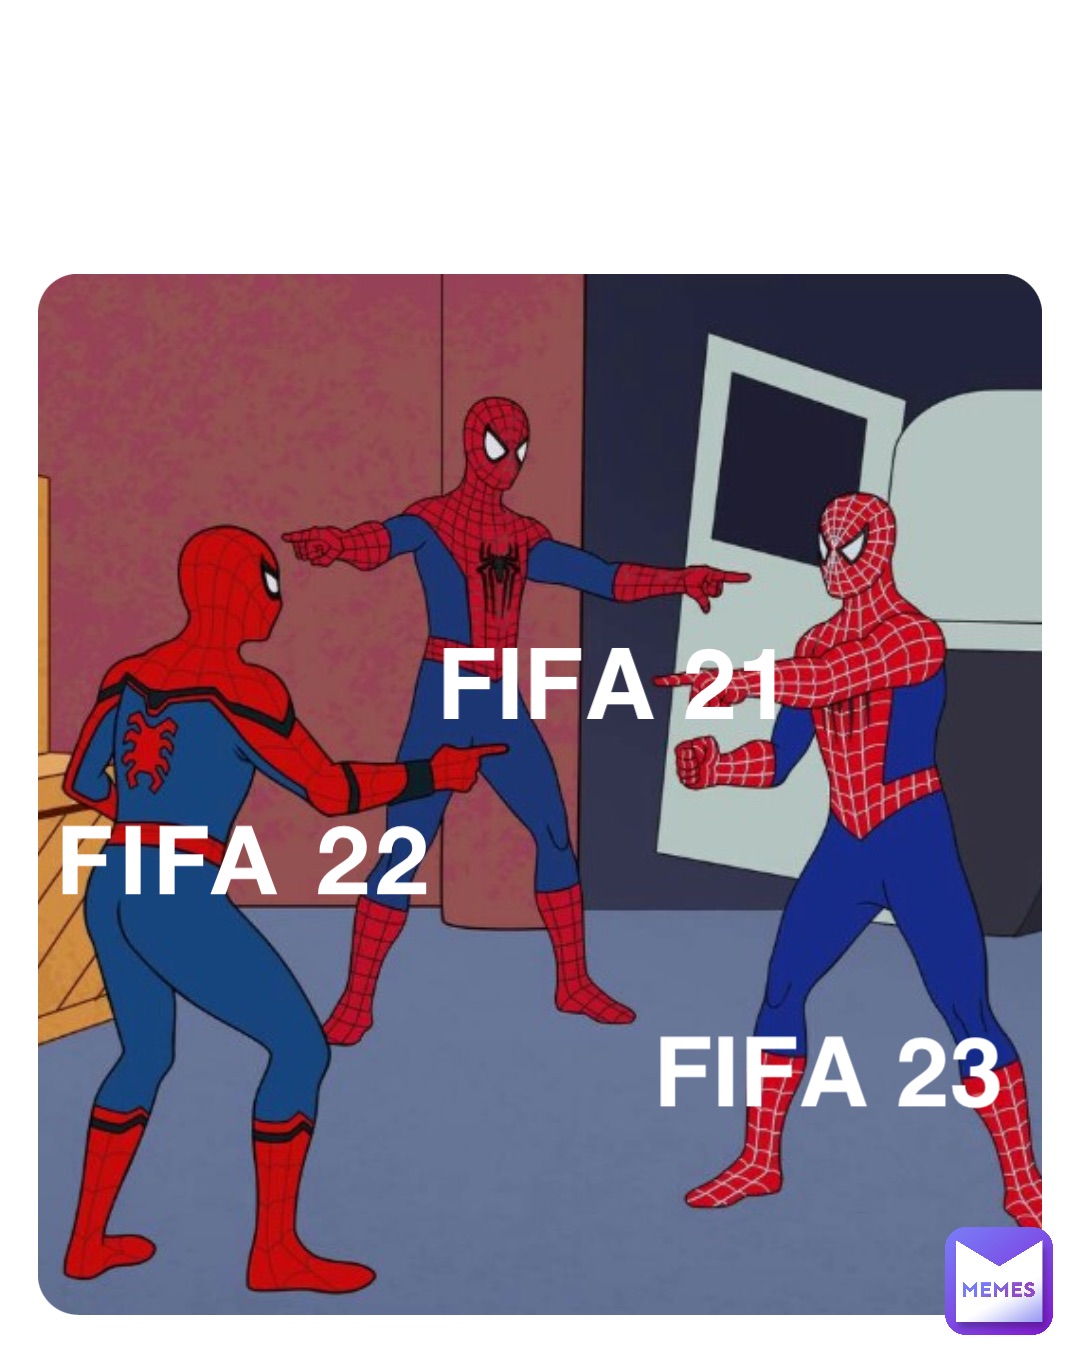 FIFA 22 FIFA 21 FIFA 23